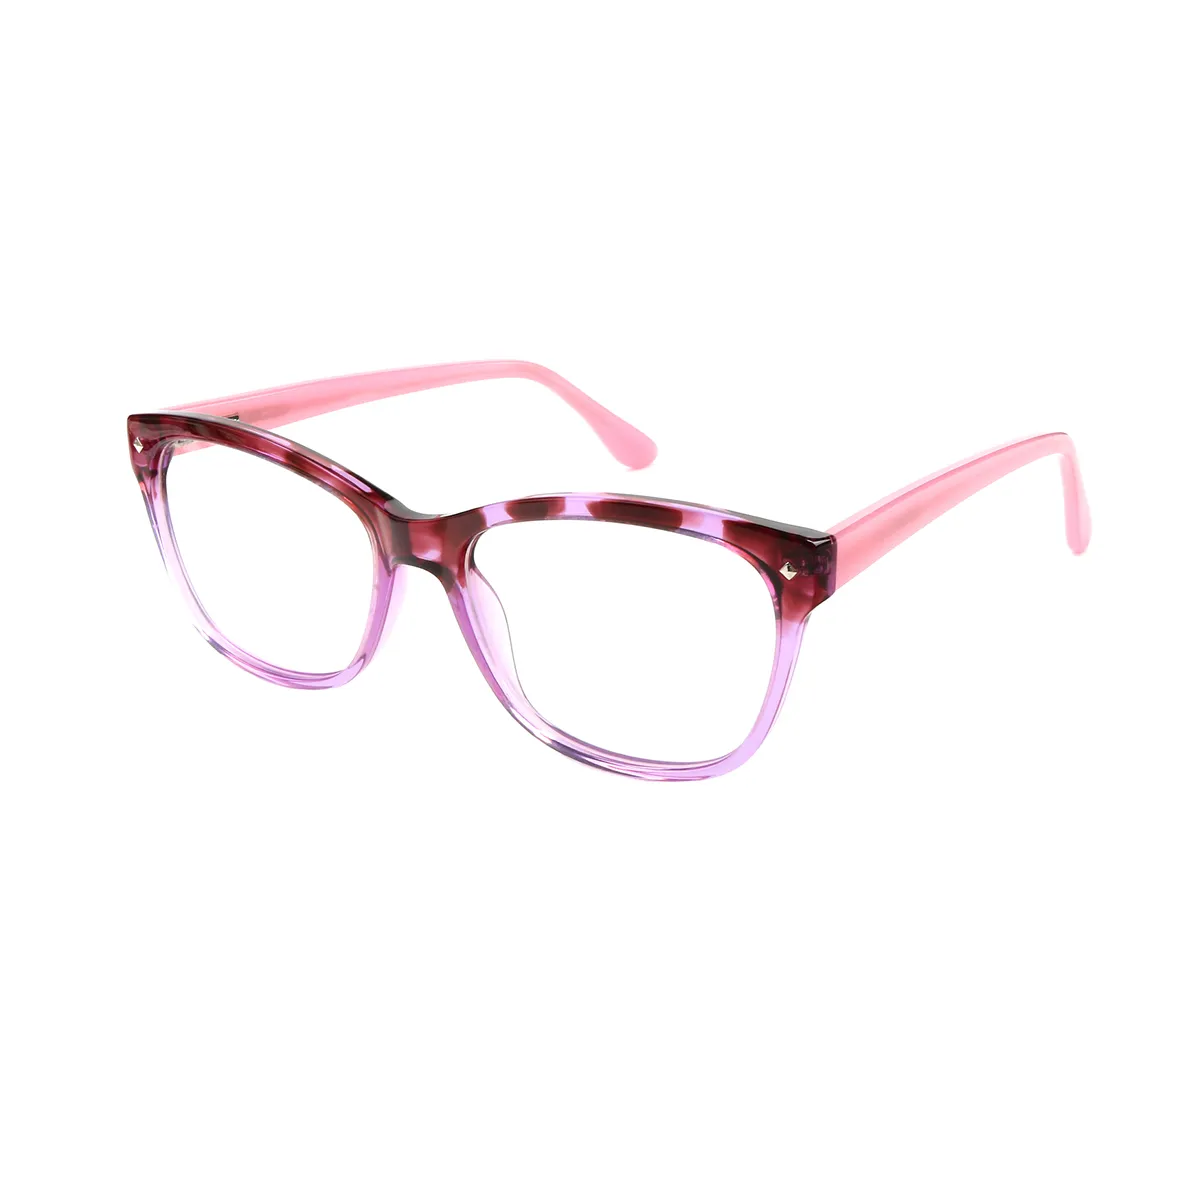 Fashion Square Red-Demi Eyeglasses for Women